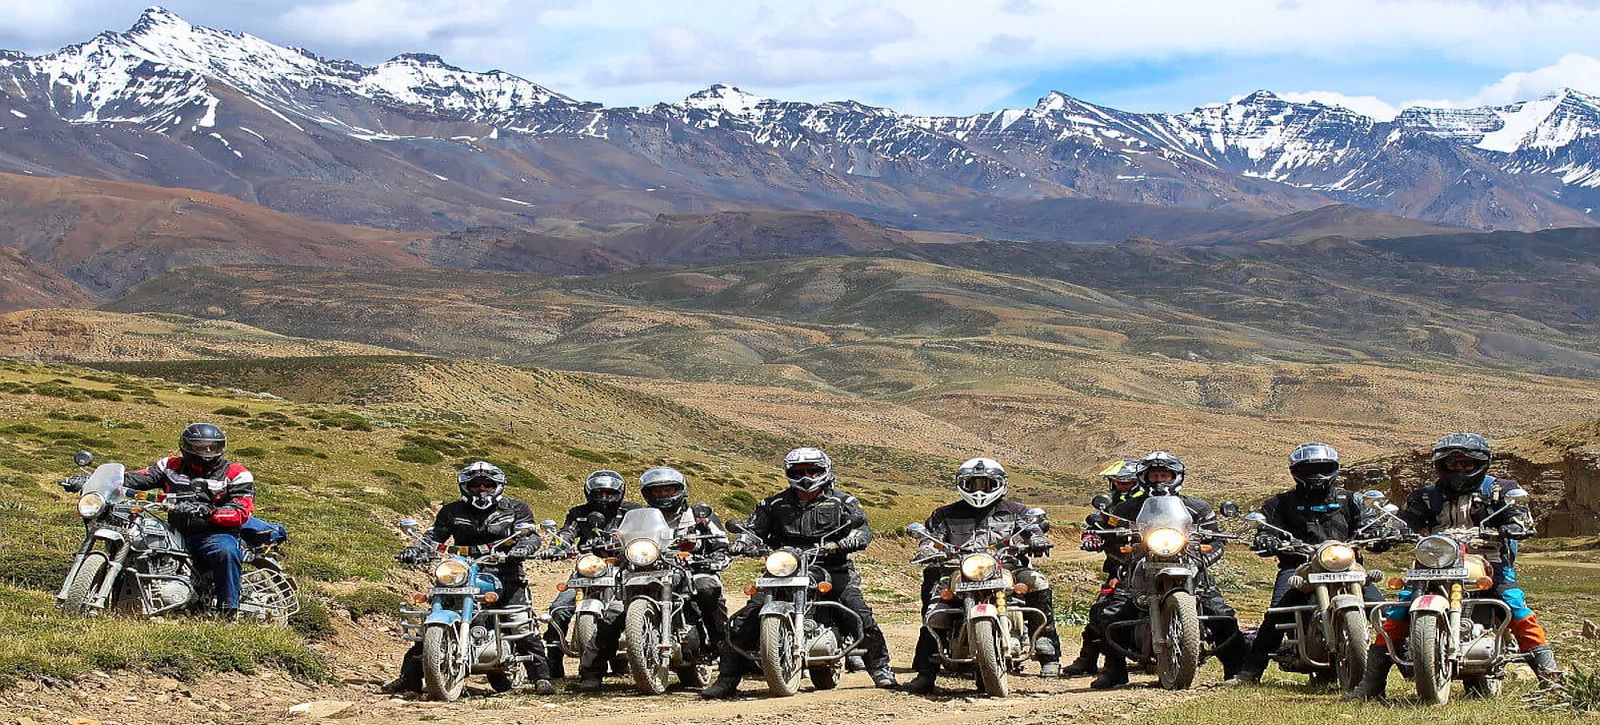 Himalayan Heights Motorcycle Tour